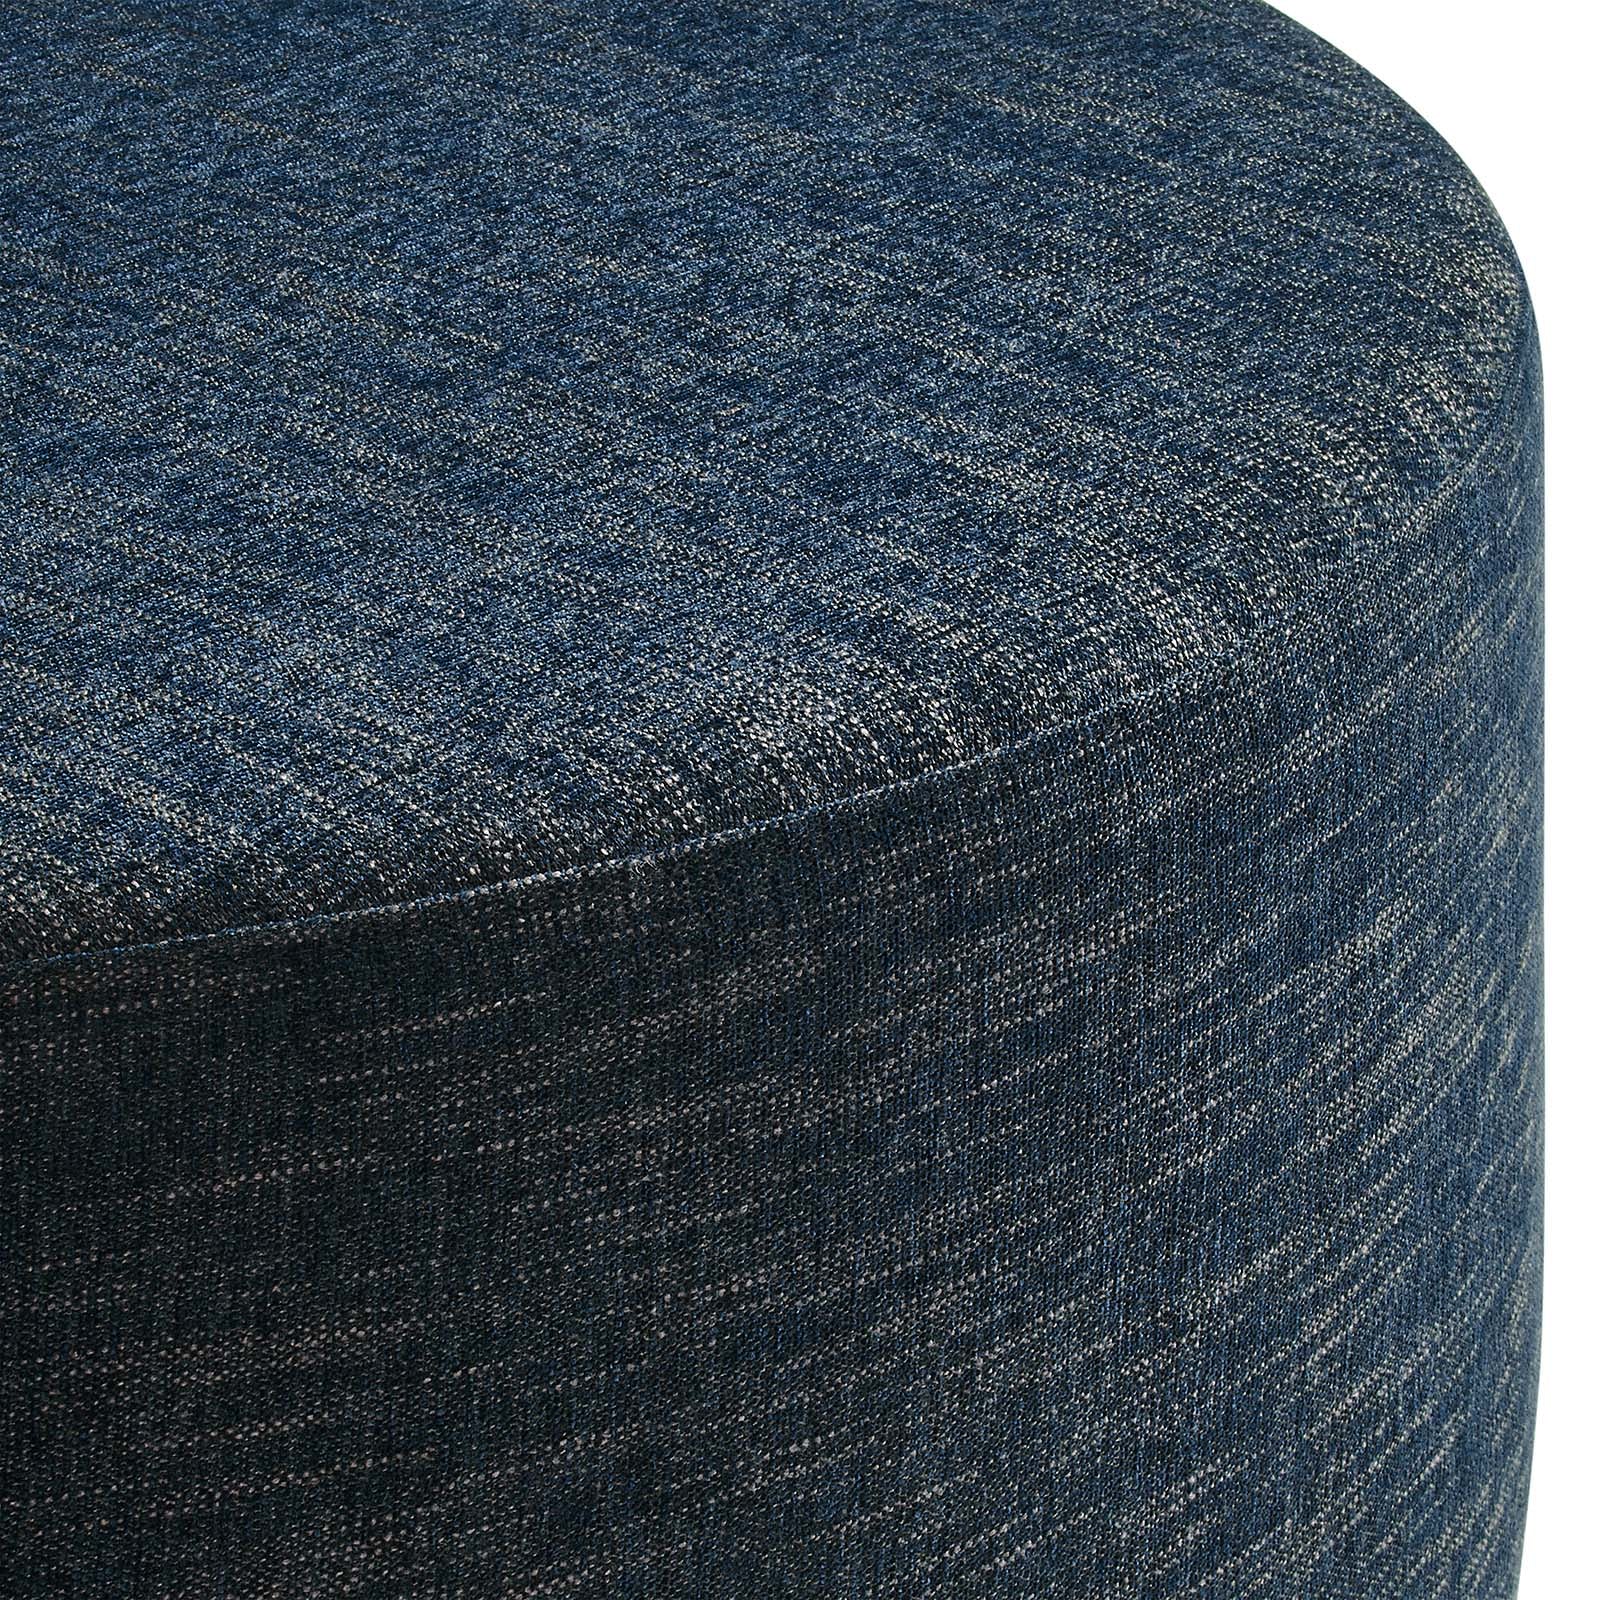 Callum Large 38" Round Woven Heathered Fabric Upholstered Ottoman